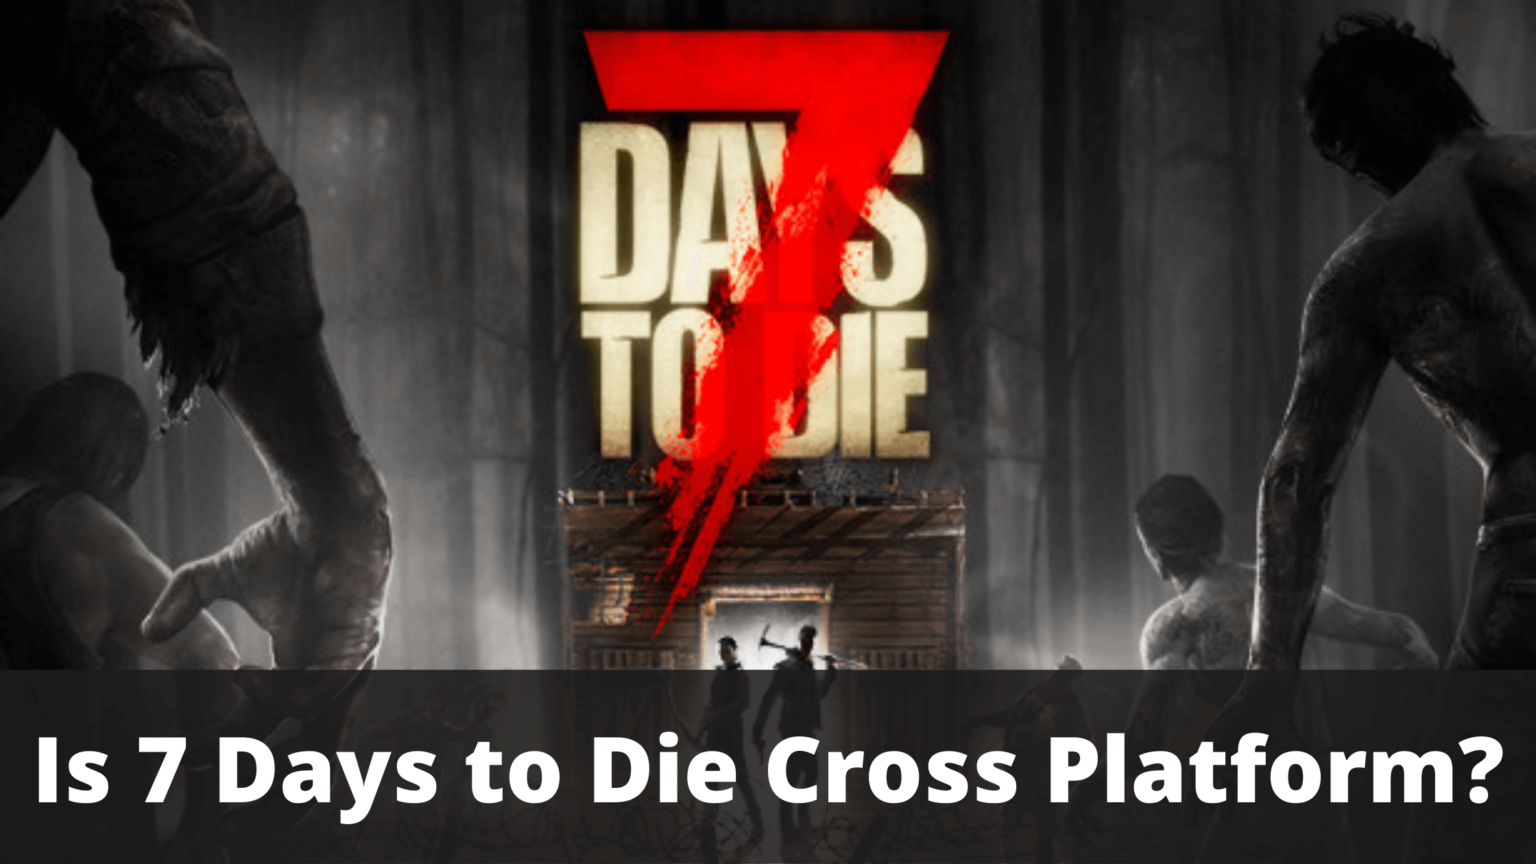 7 days to die cross platform pc and xbox